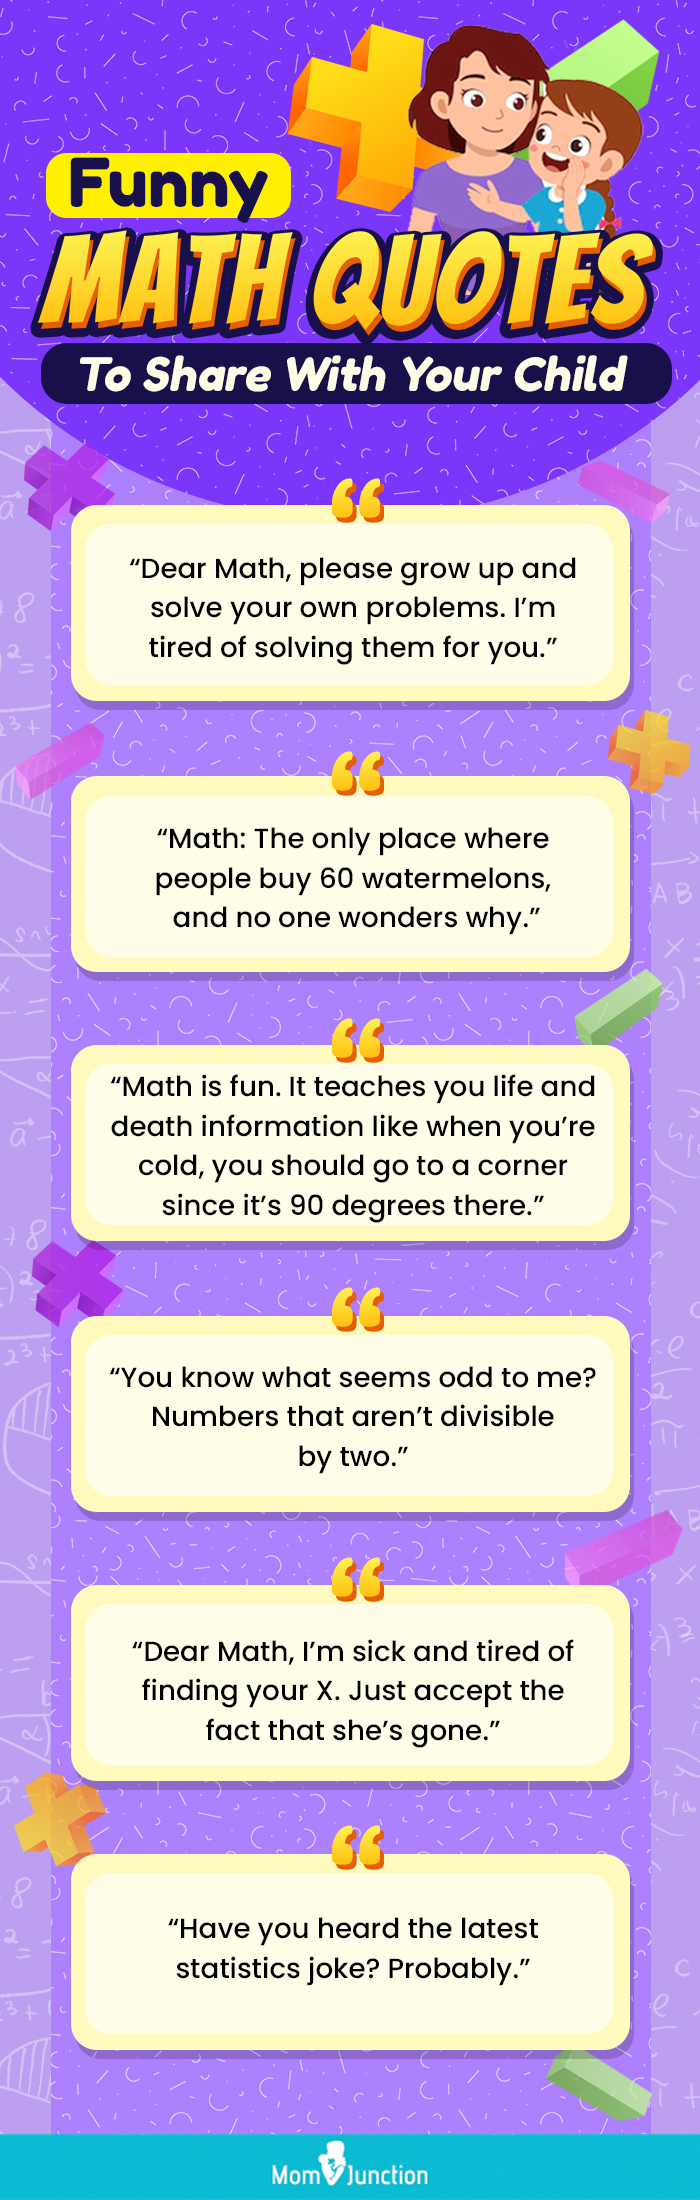 humorous math quotes (infographic)